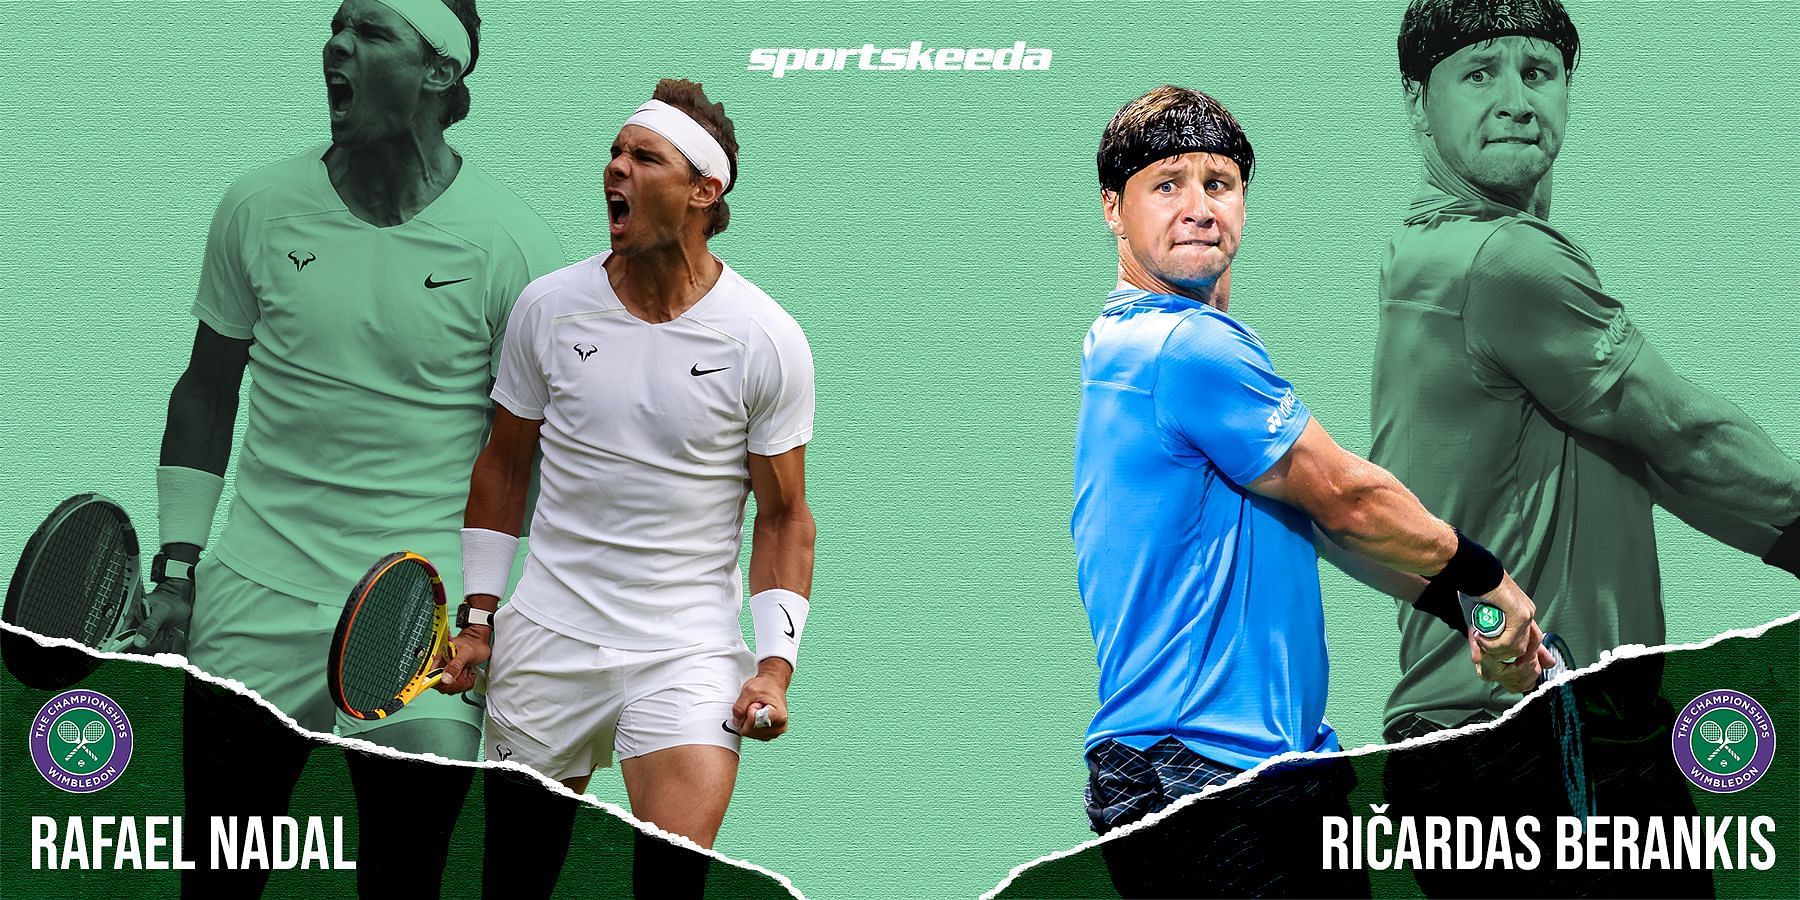 Wimbledon 2022 Rafael Nadal vs Ricardas Berankis preview, head-to-head, prediction, odds and pick